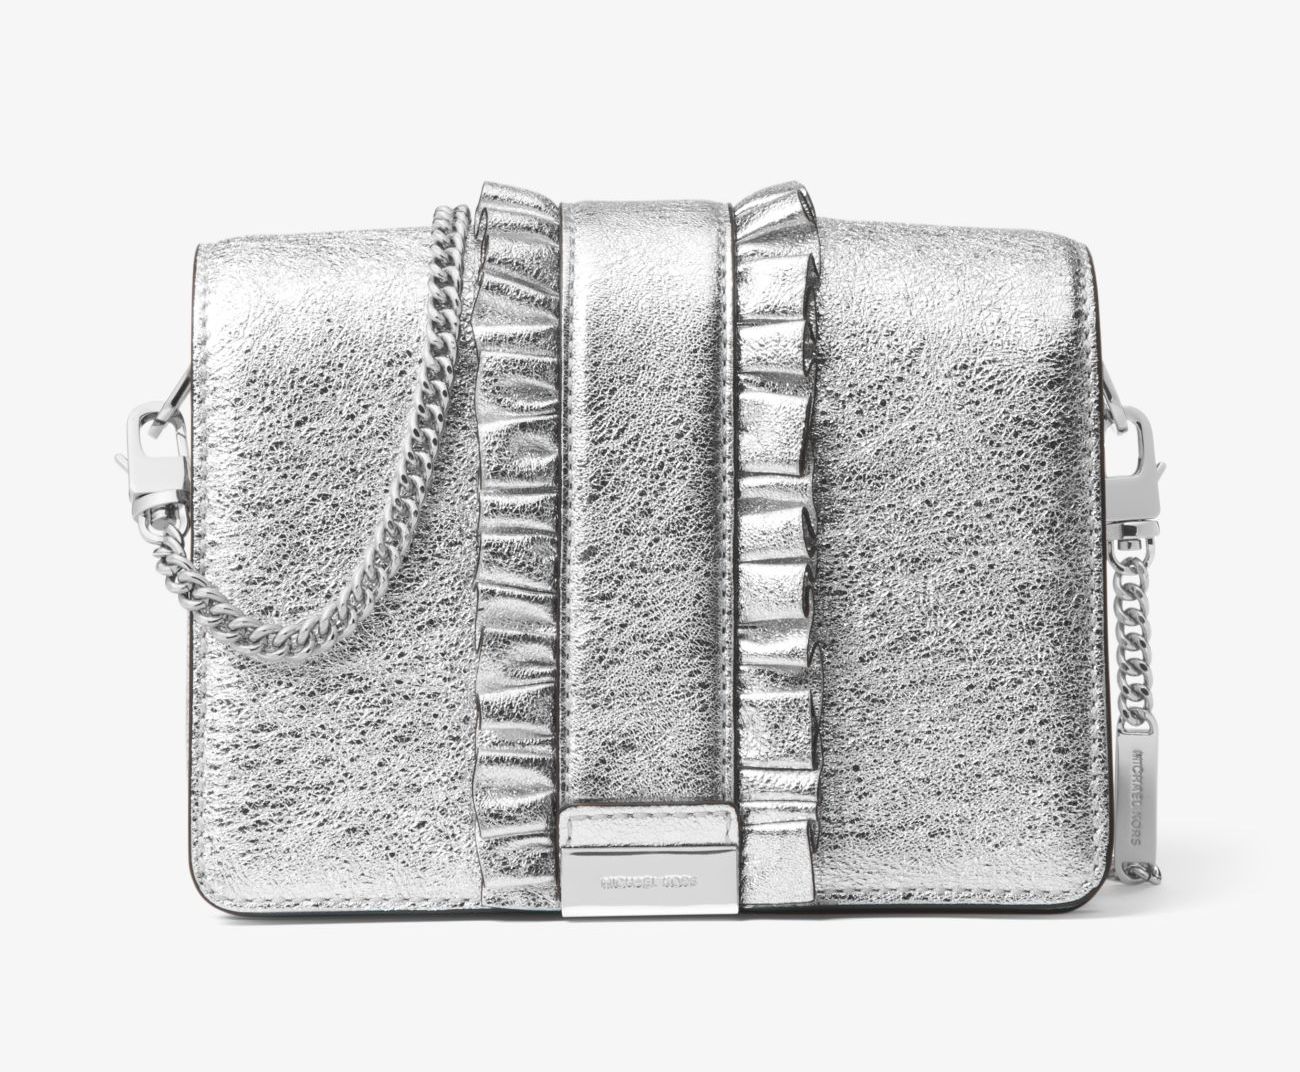 MICHAEL KORS kabelka Jade Ruffled Metallic Leather Clutch silver